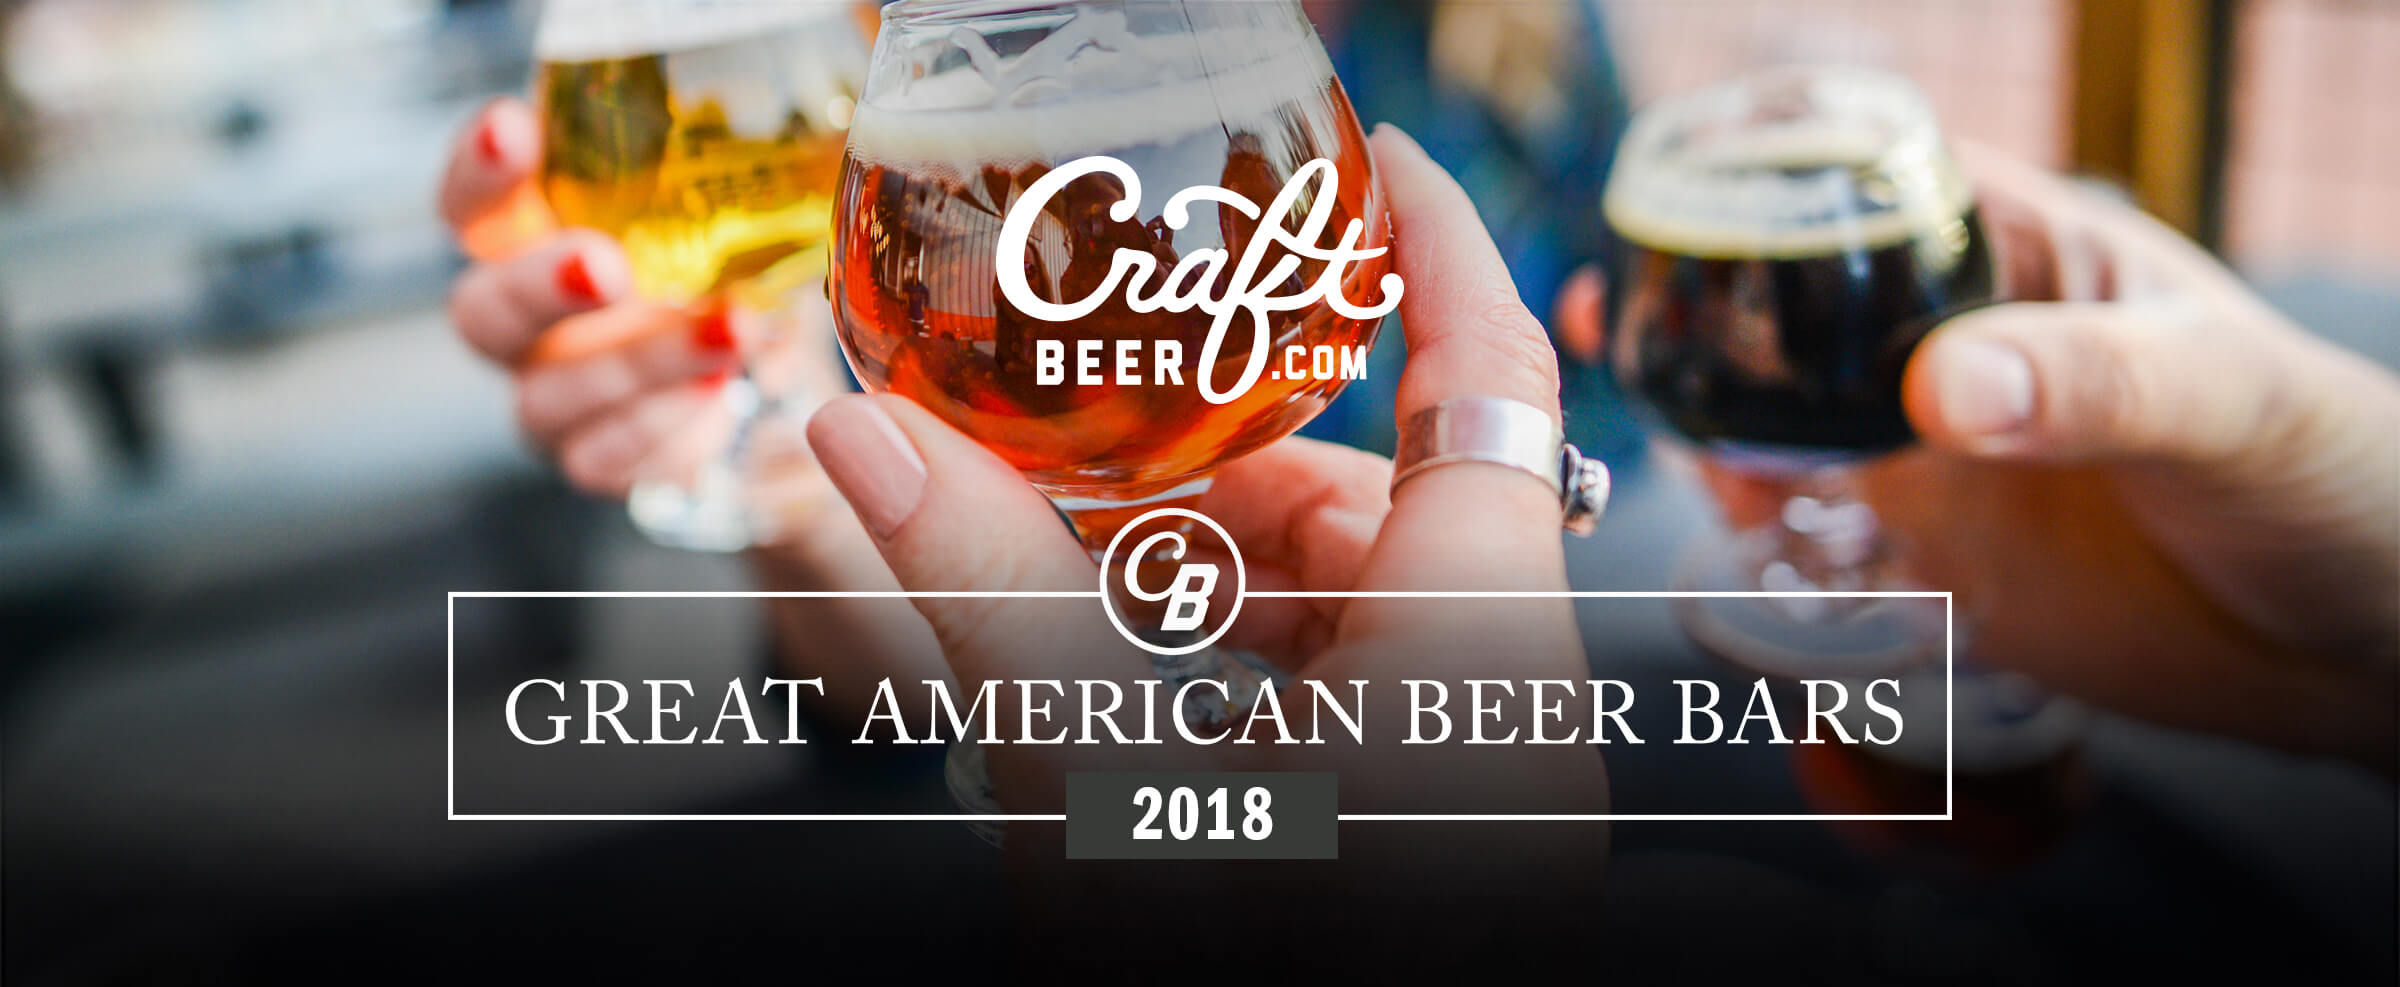 CraftBeercom Great American Beer Bars 2018  header